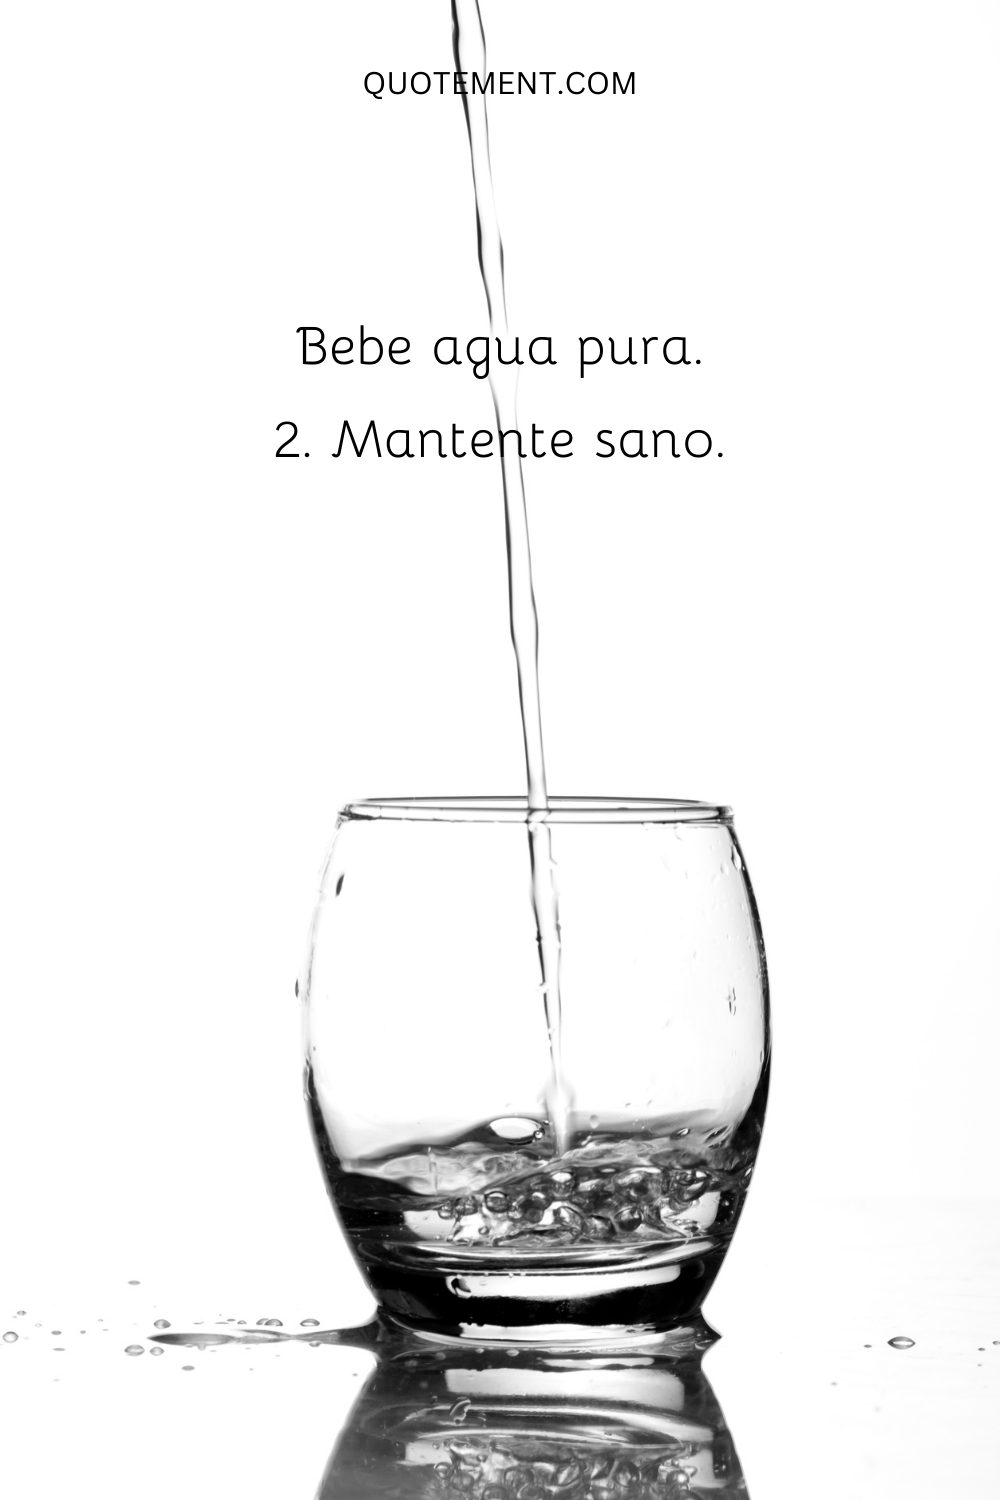 Bebe agua pura. Mantente sano.